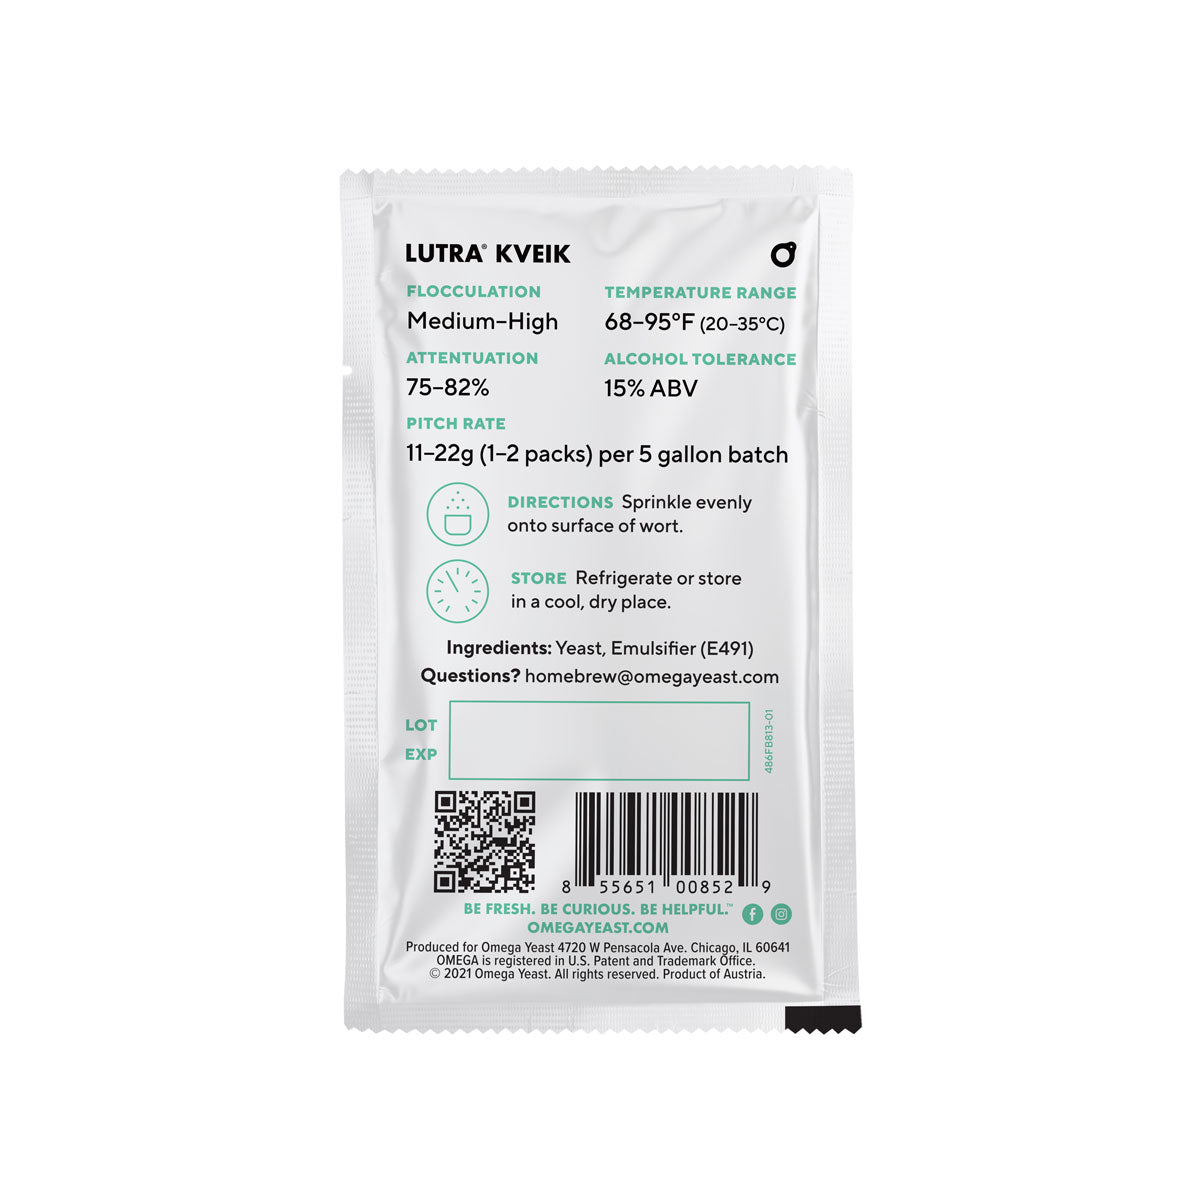 Lutra® Kveik Dry Yeast by Omega Yeast